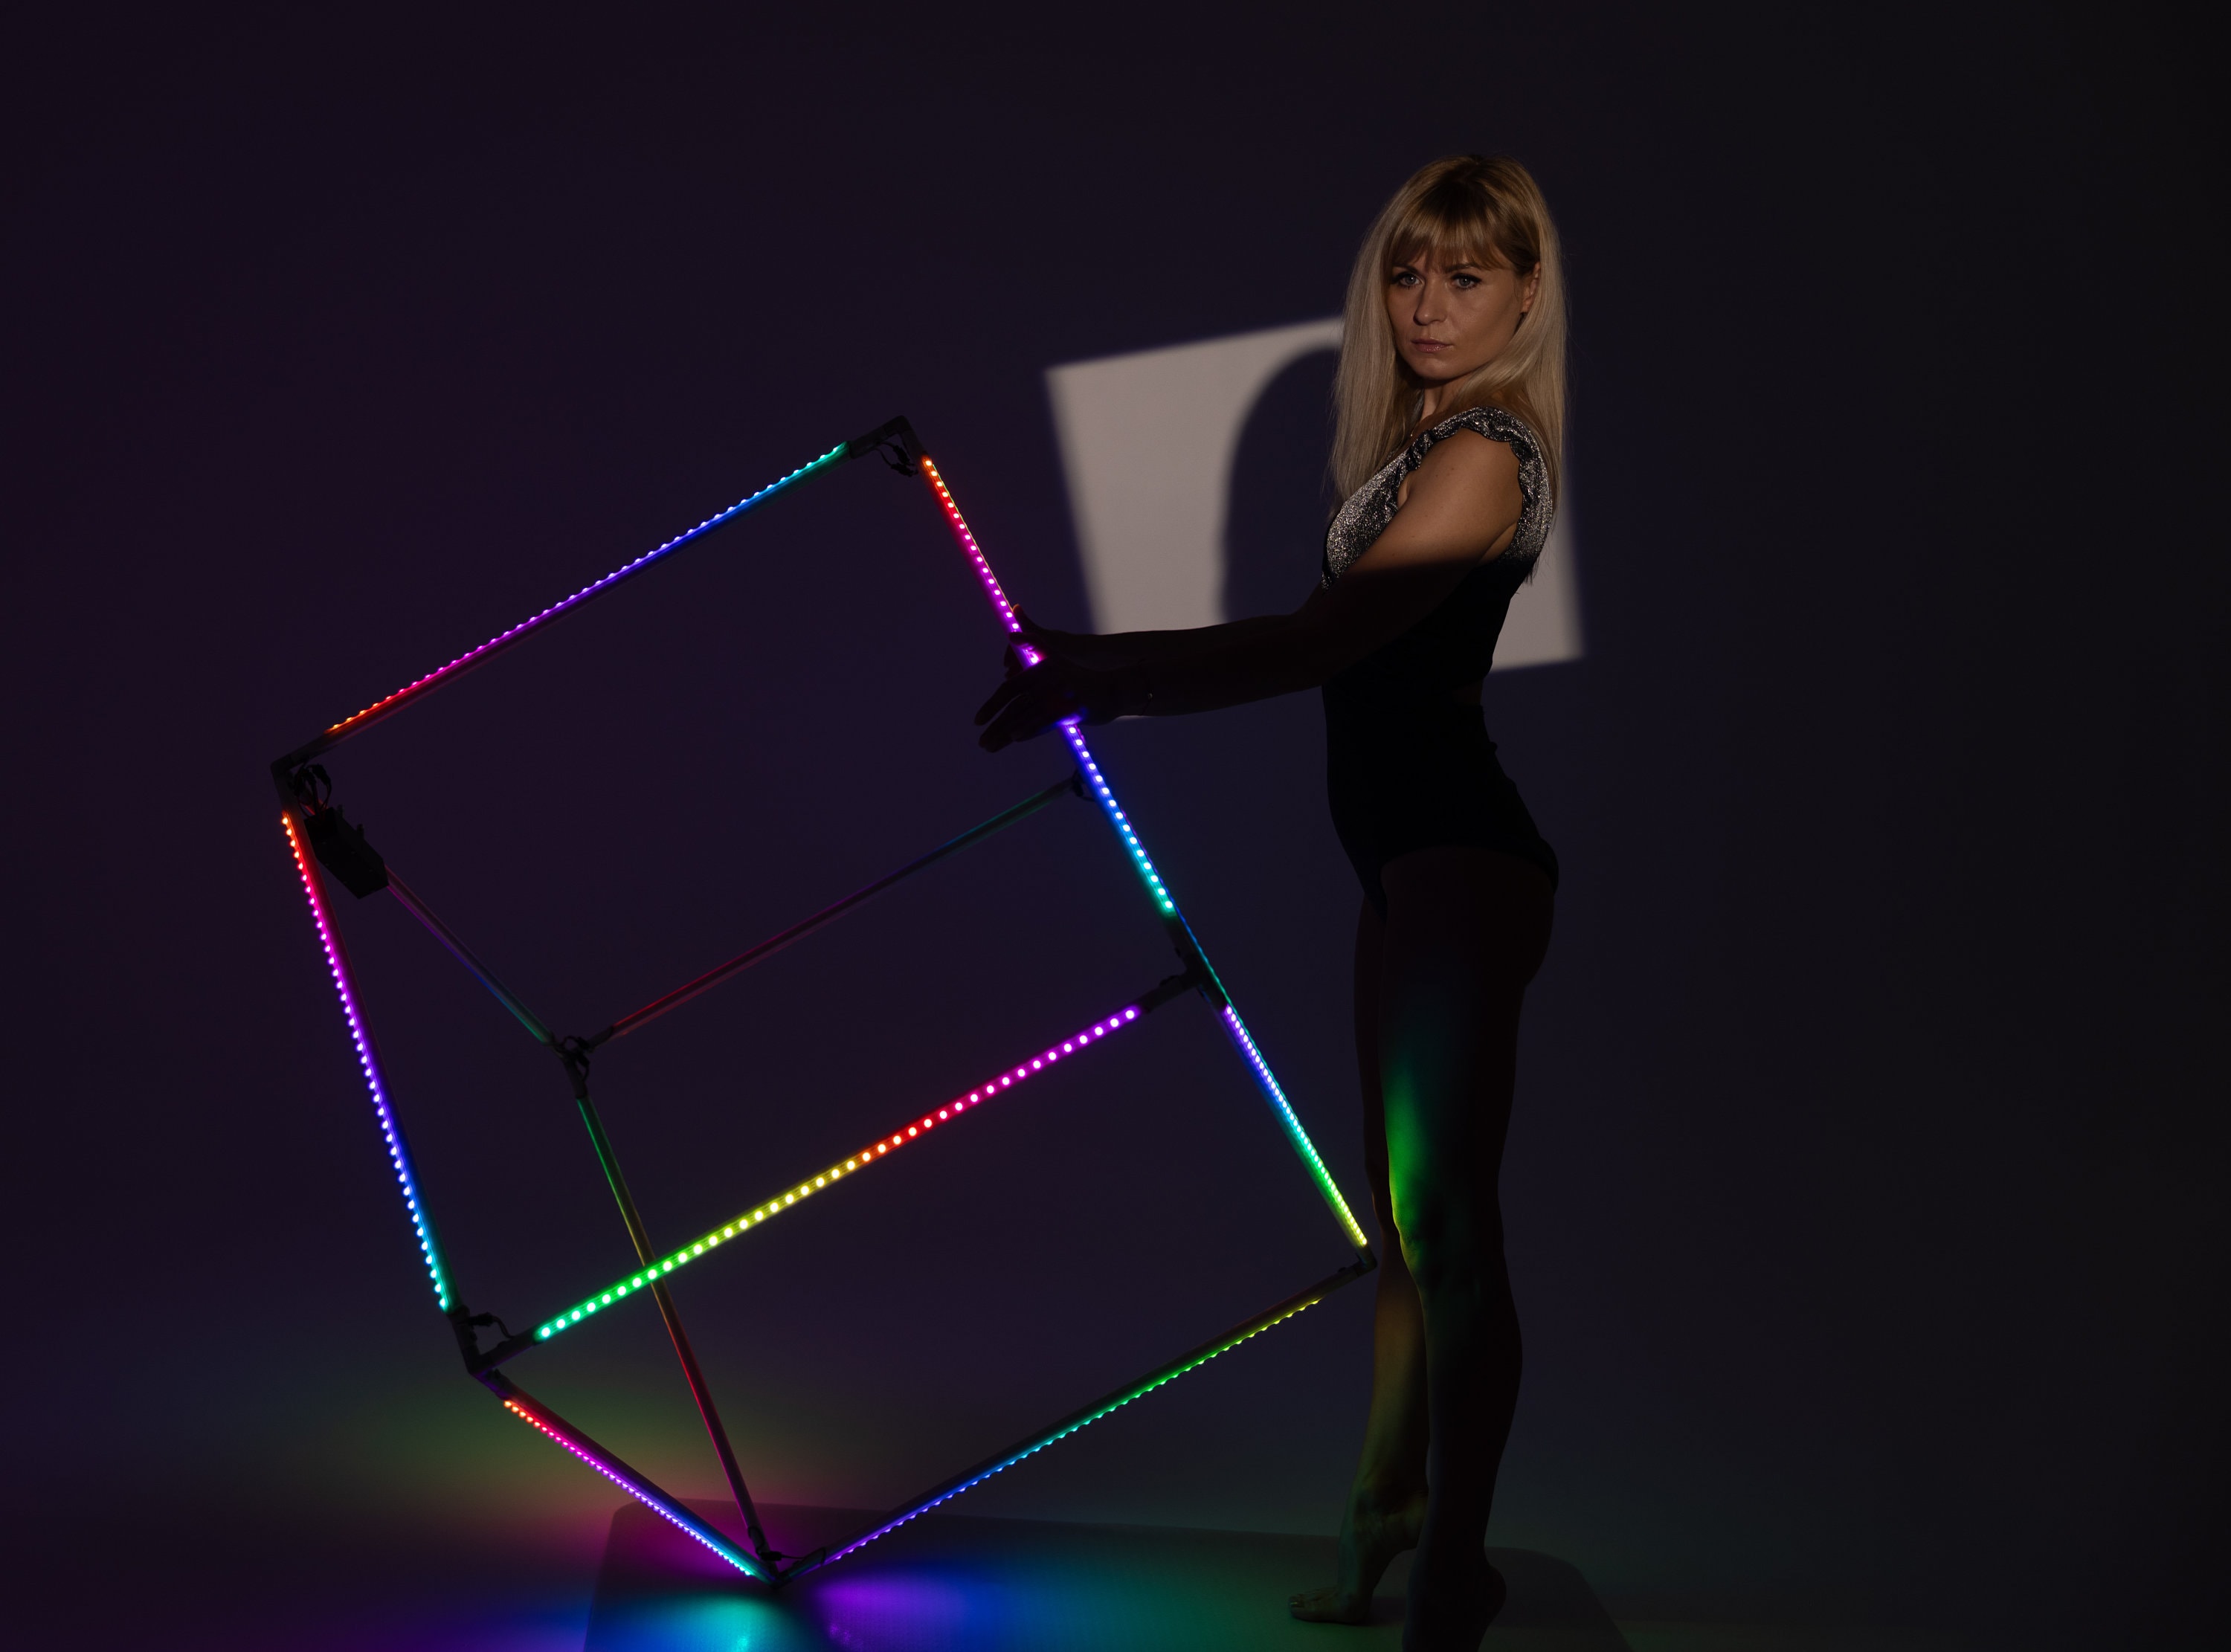 Cube, Manipulation, Juggling